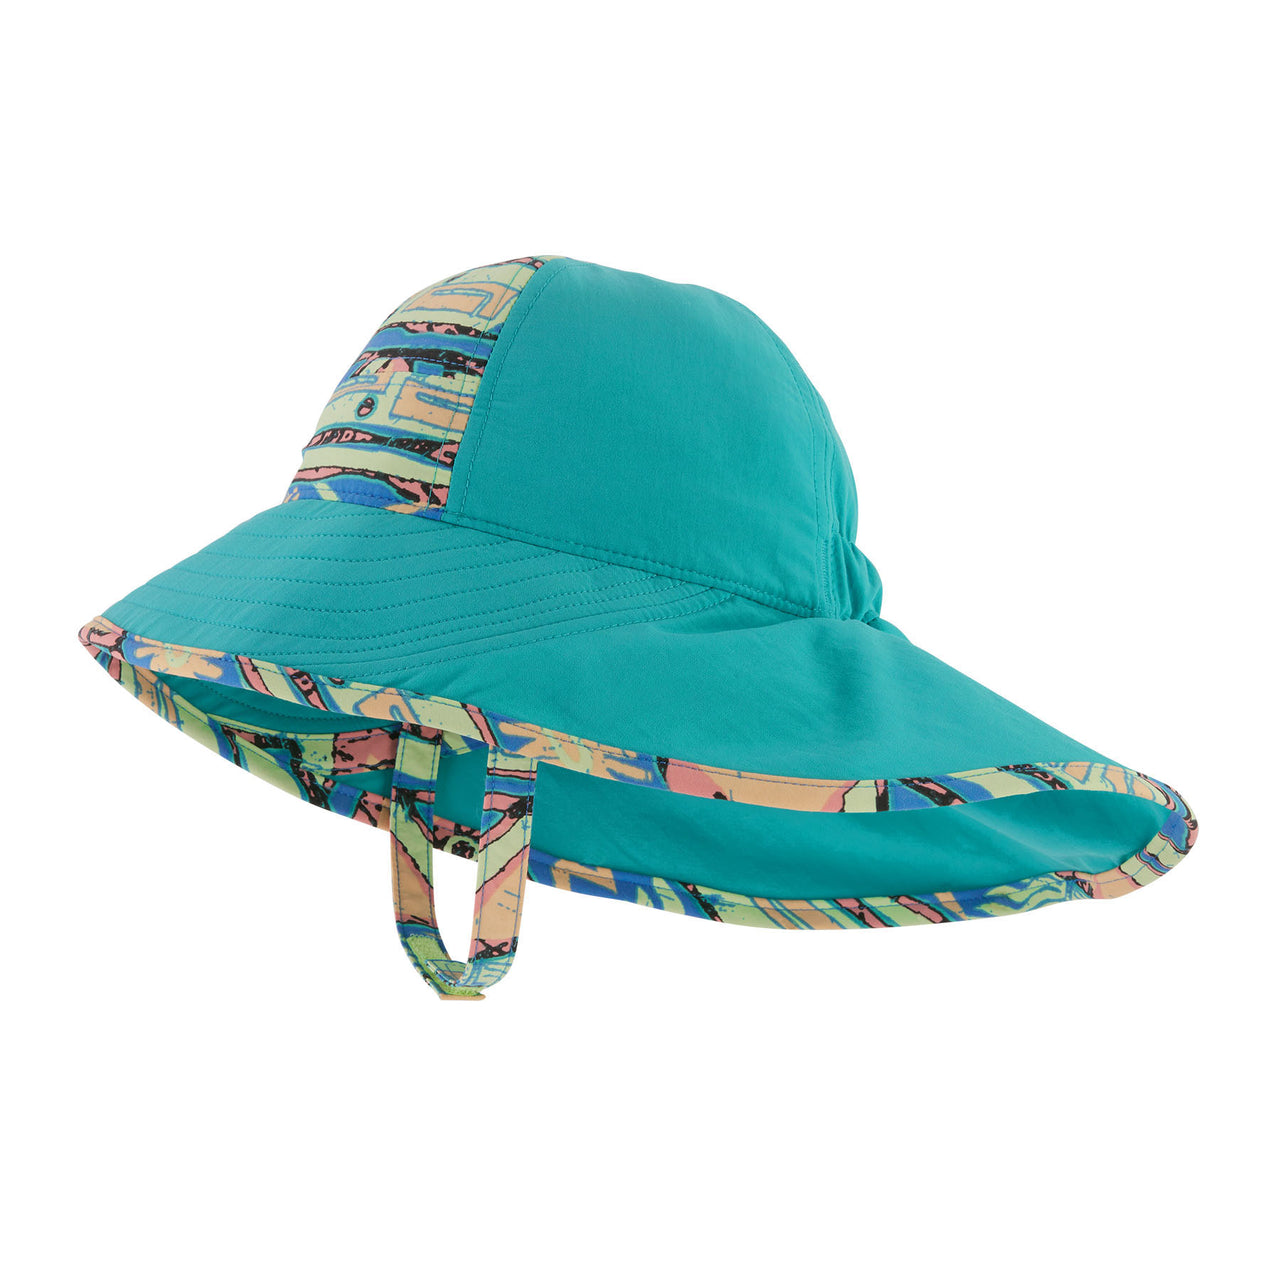 Baby Block-the-Sun UPF Hat